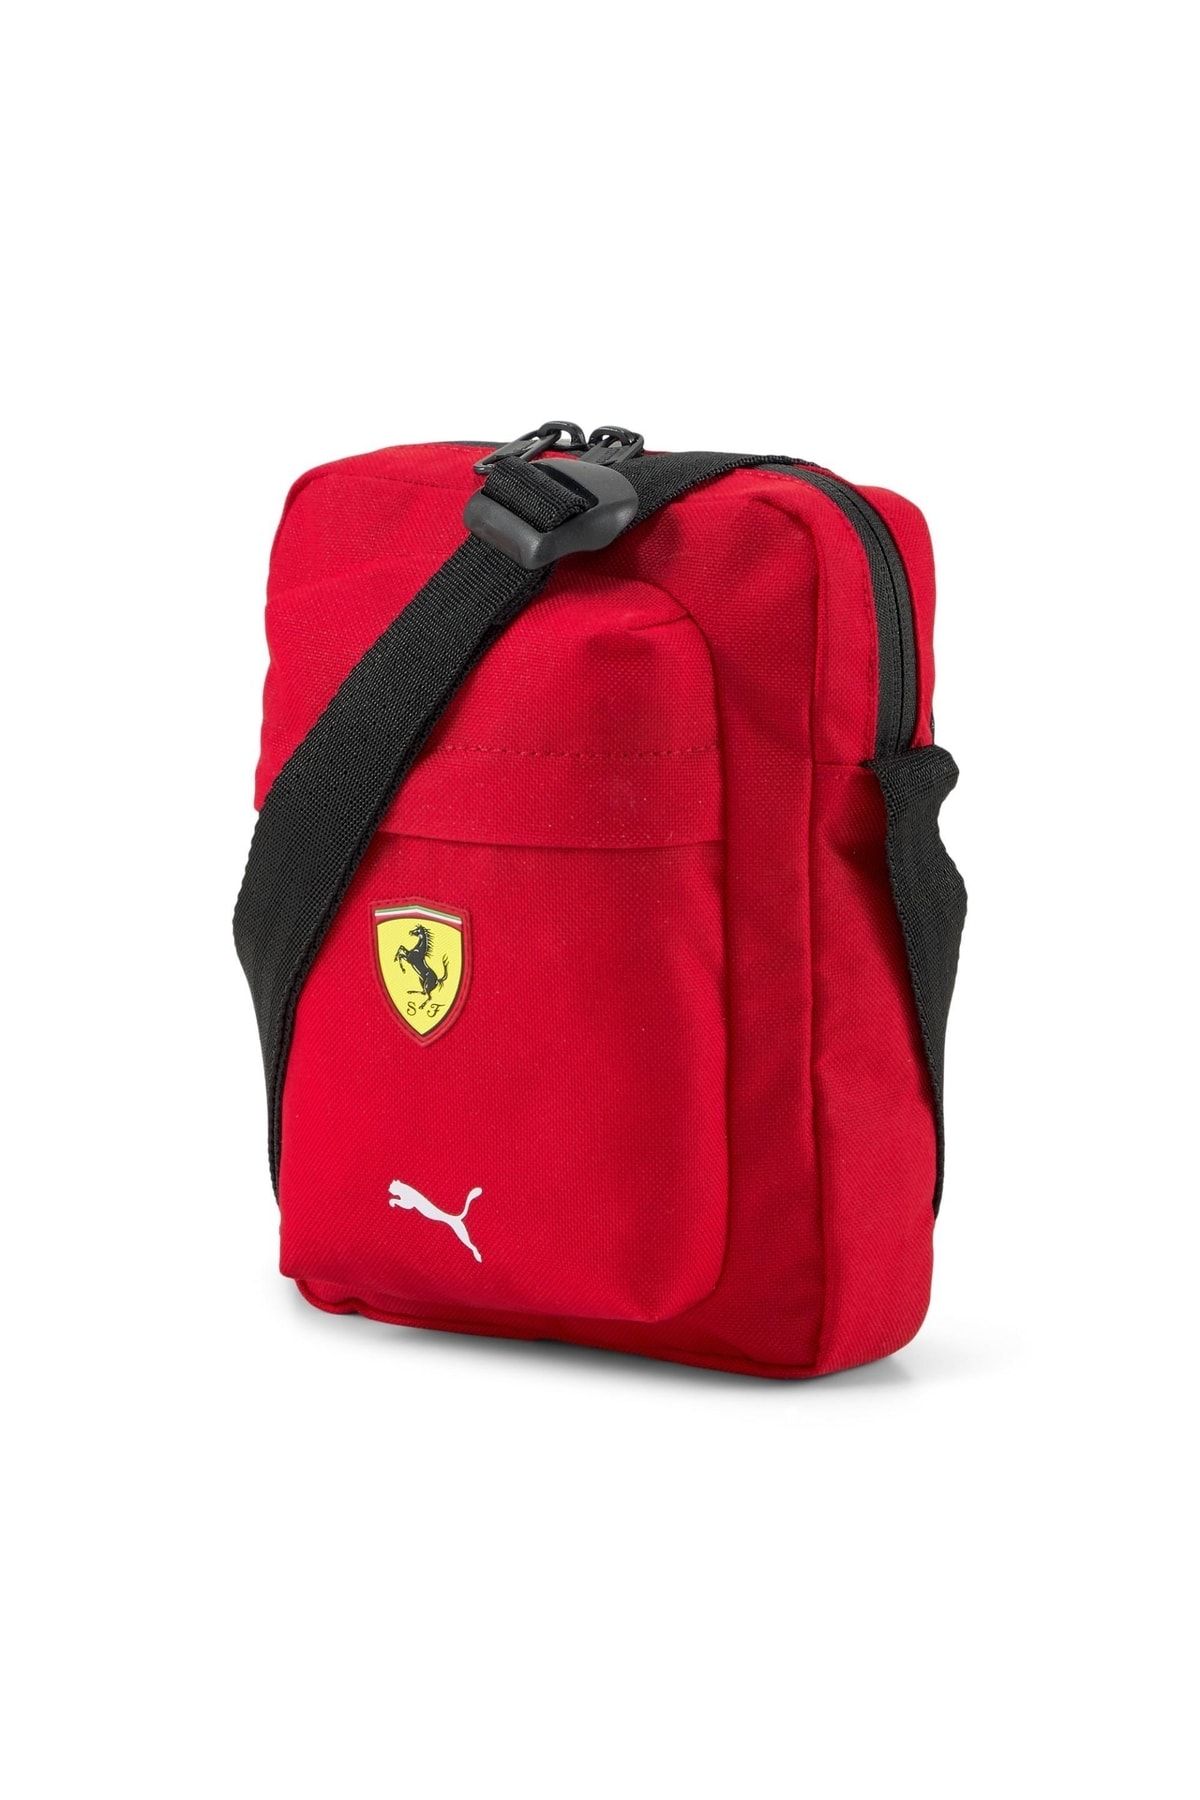 Puma Ferrari Sptwr Race Portable Erkek Çanta Kırmızı 07956701